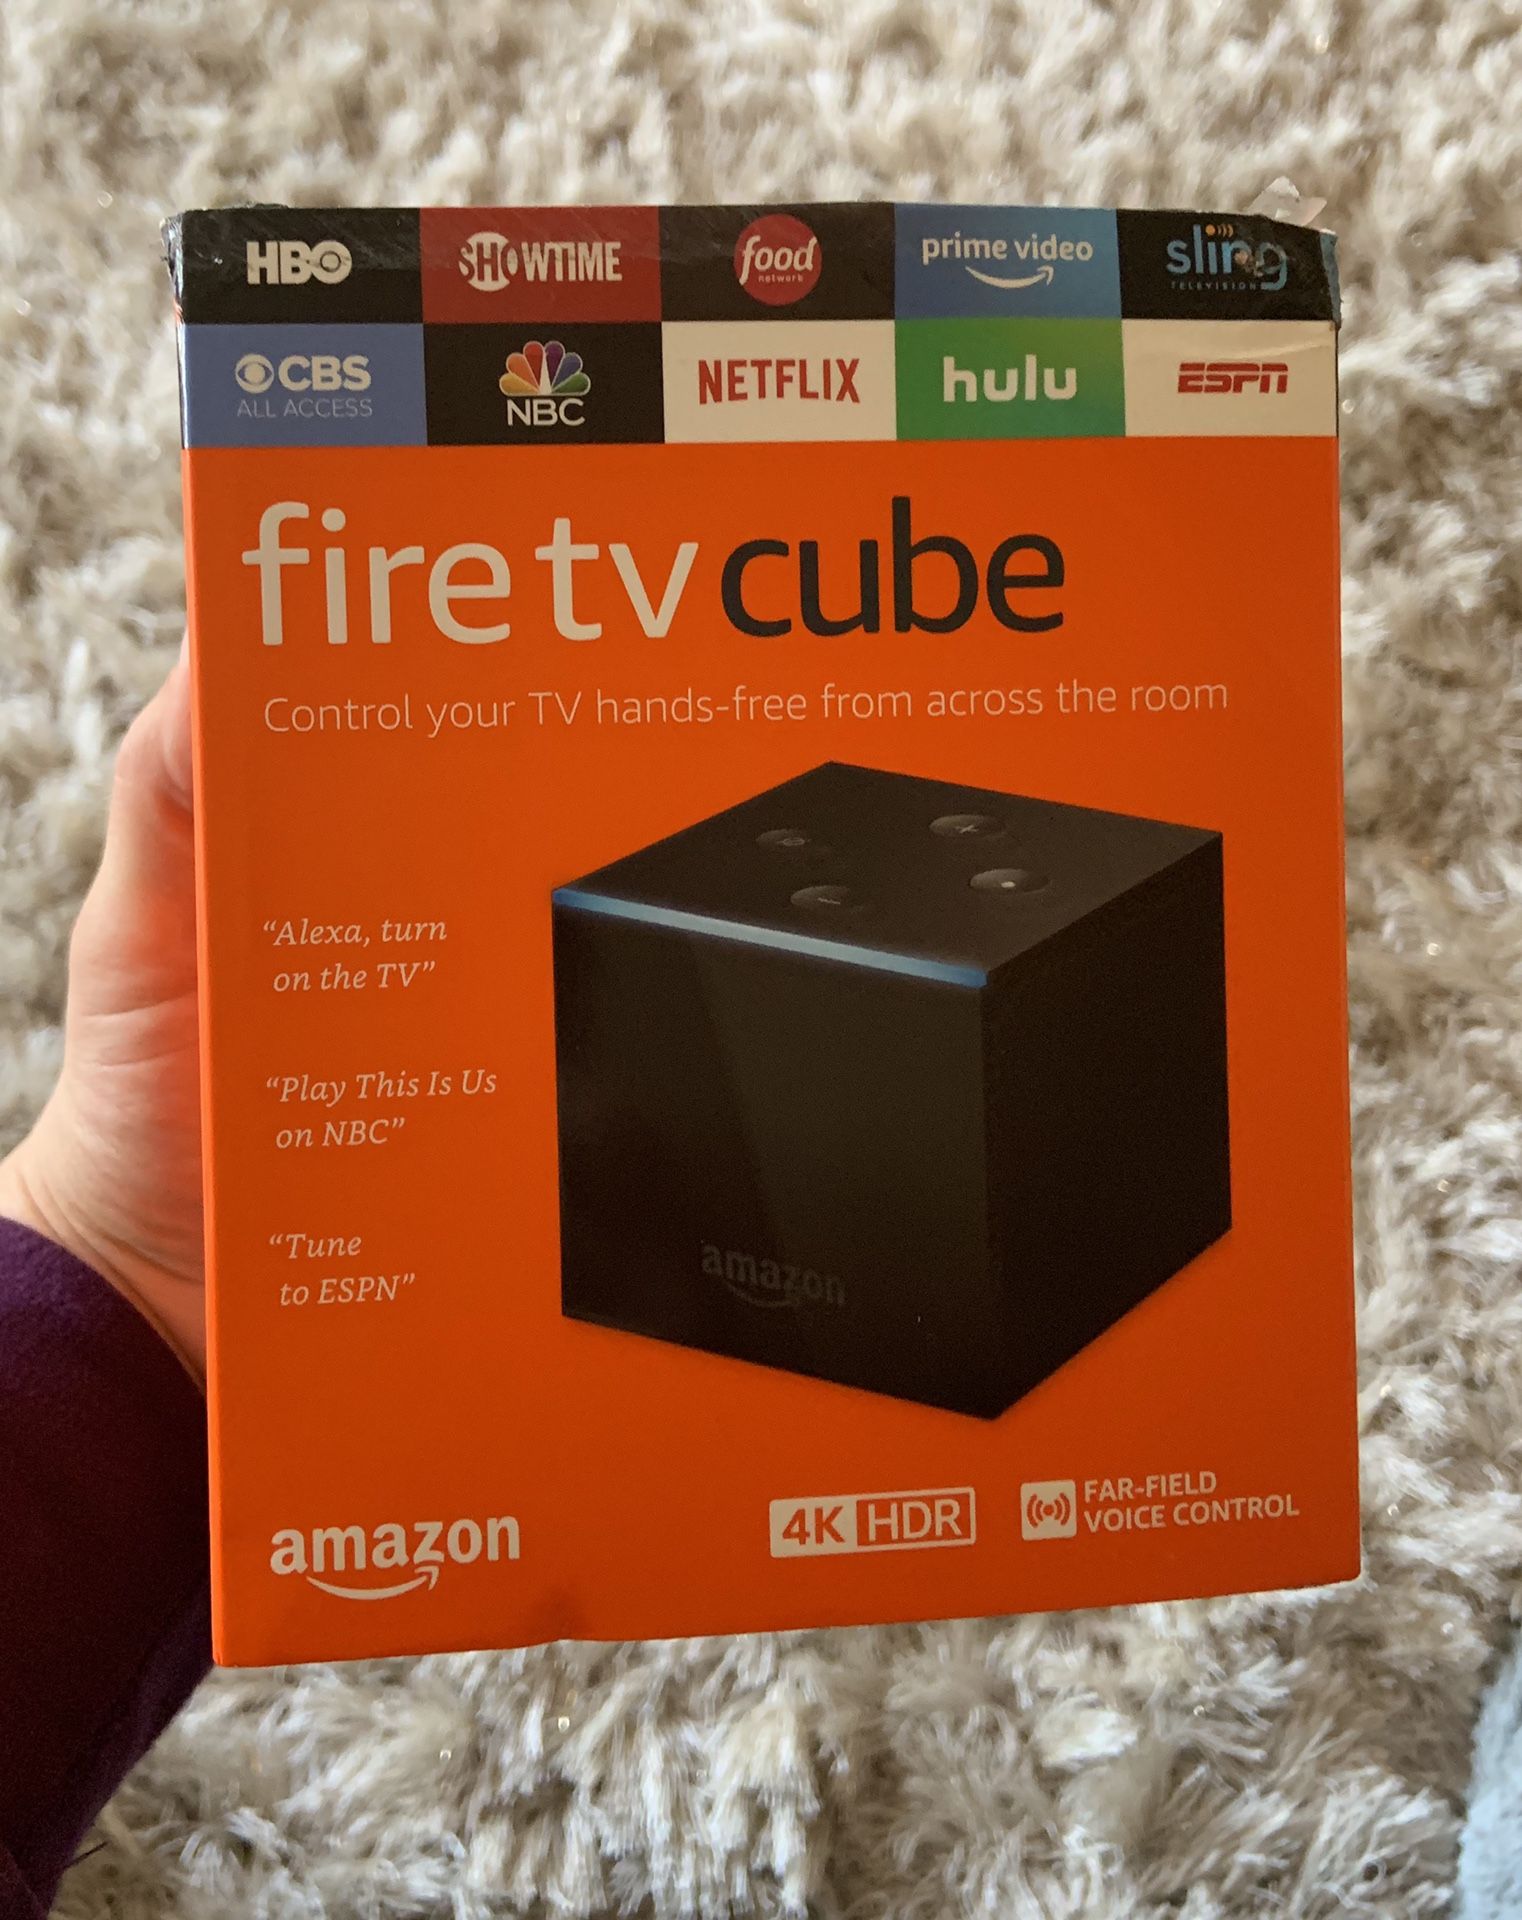 Fire TV cube